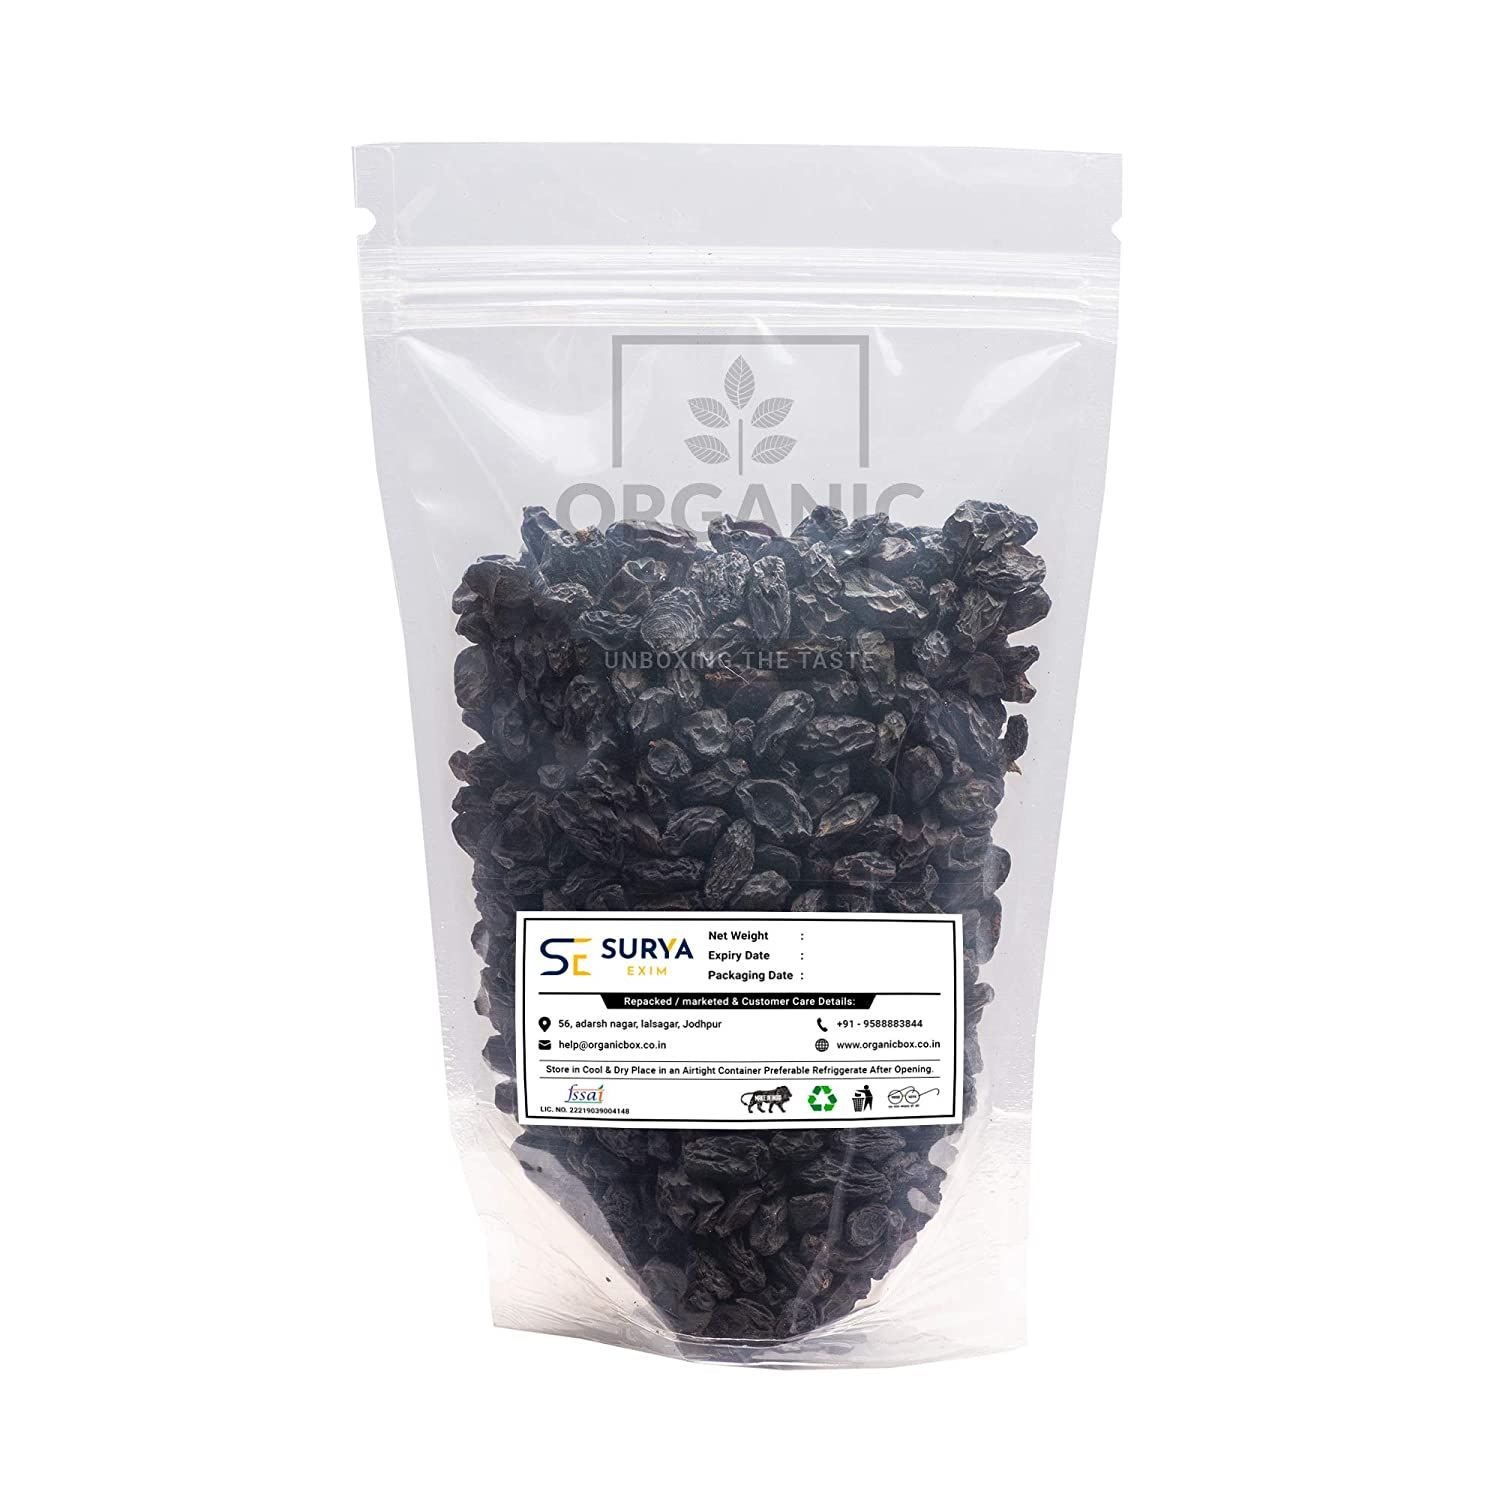 Organic Box Black Raisins Seedless Image